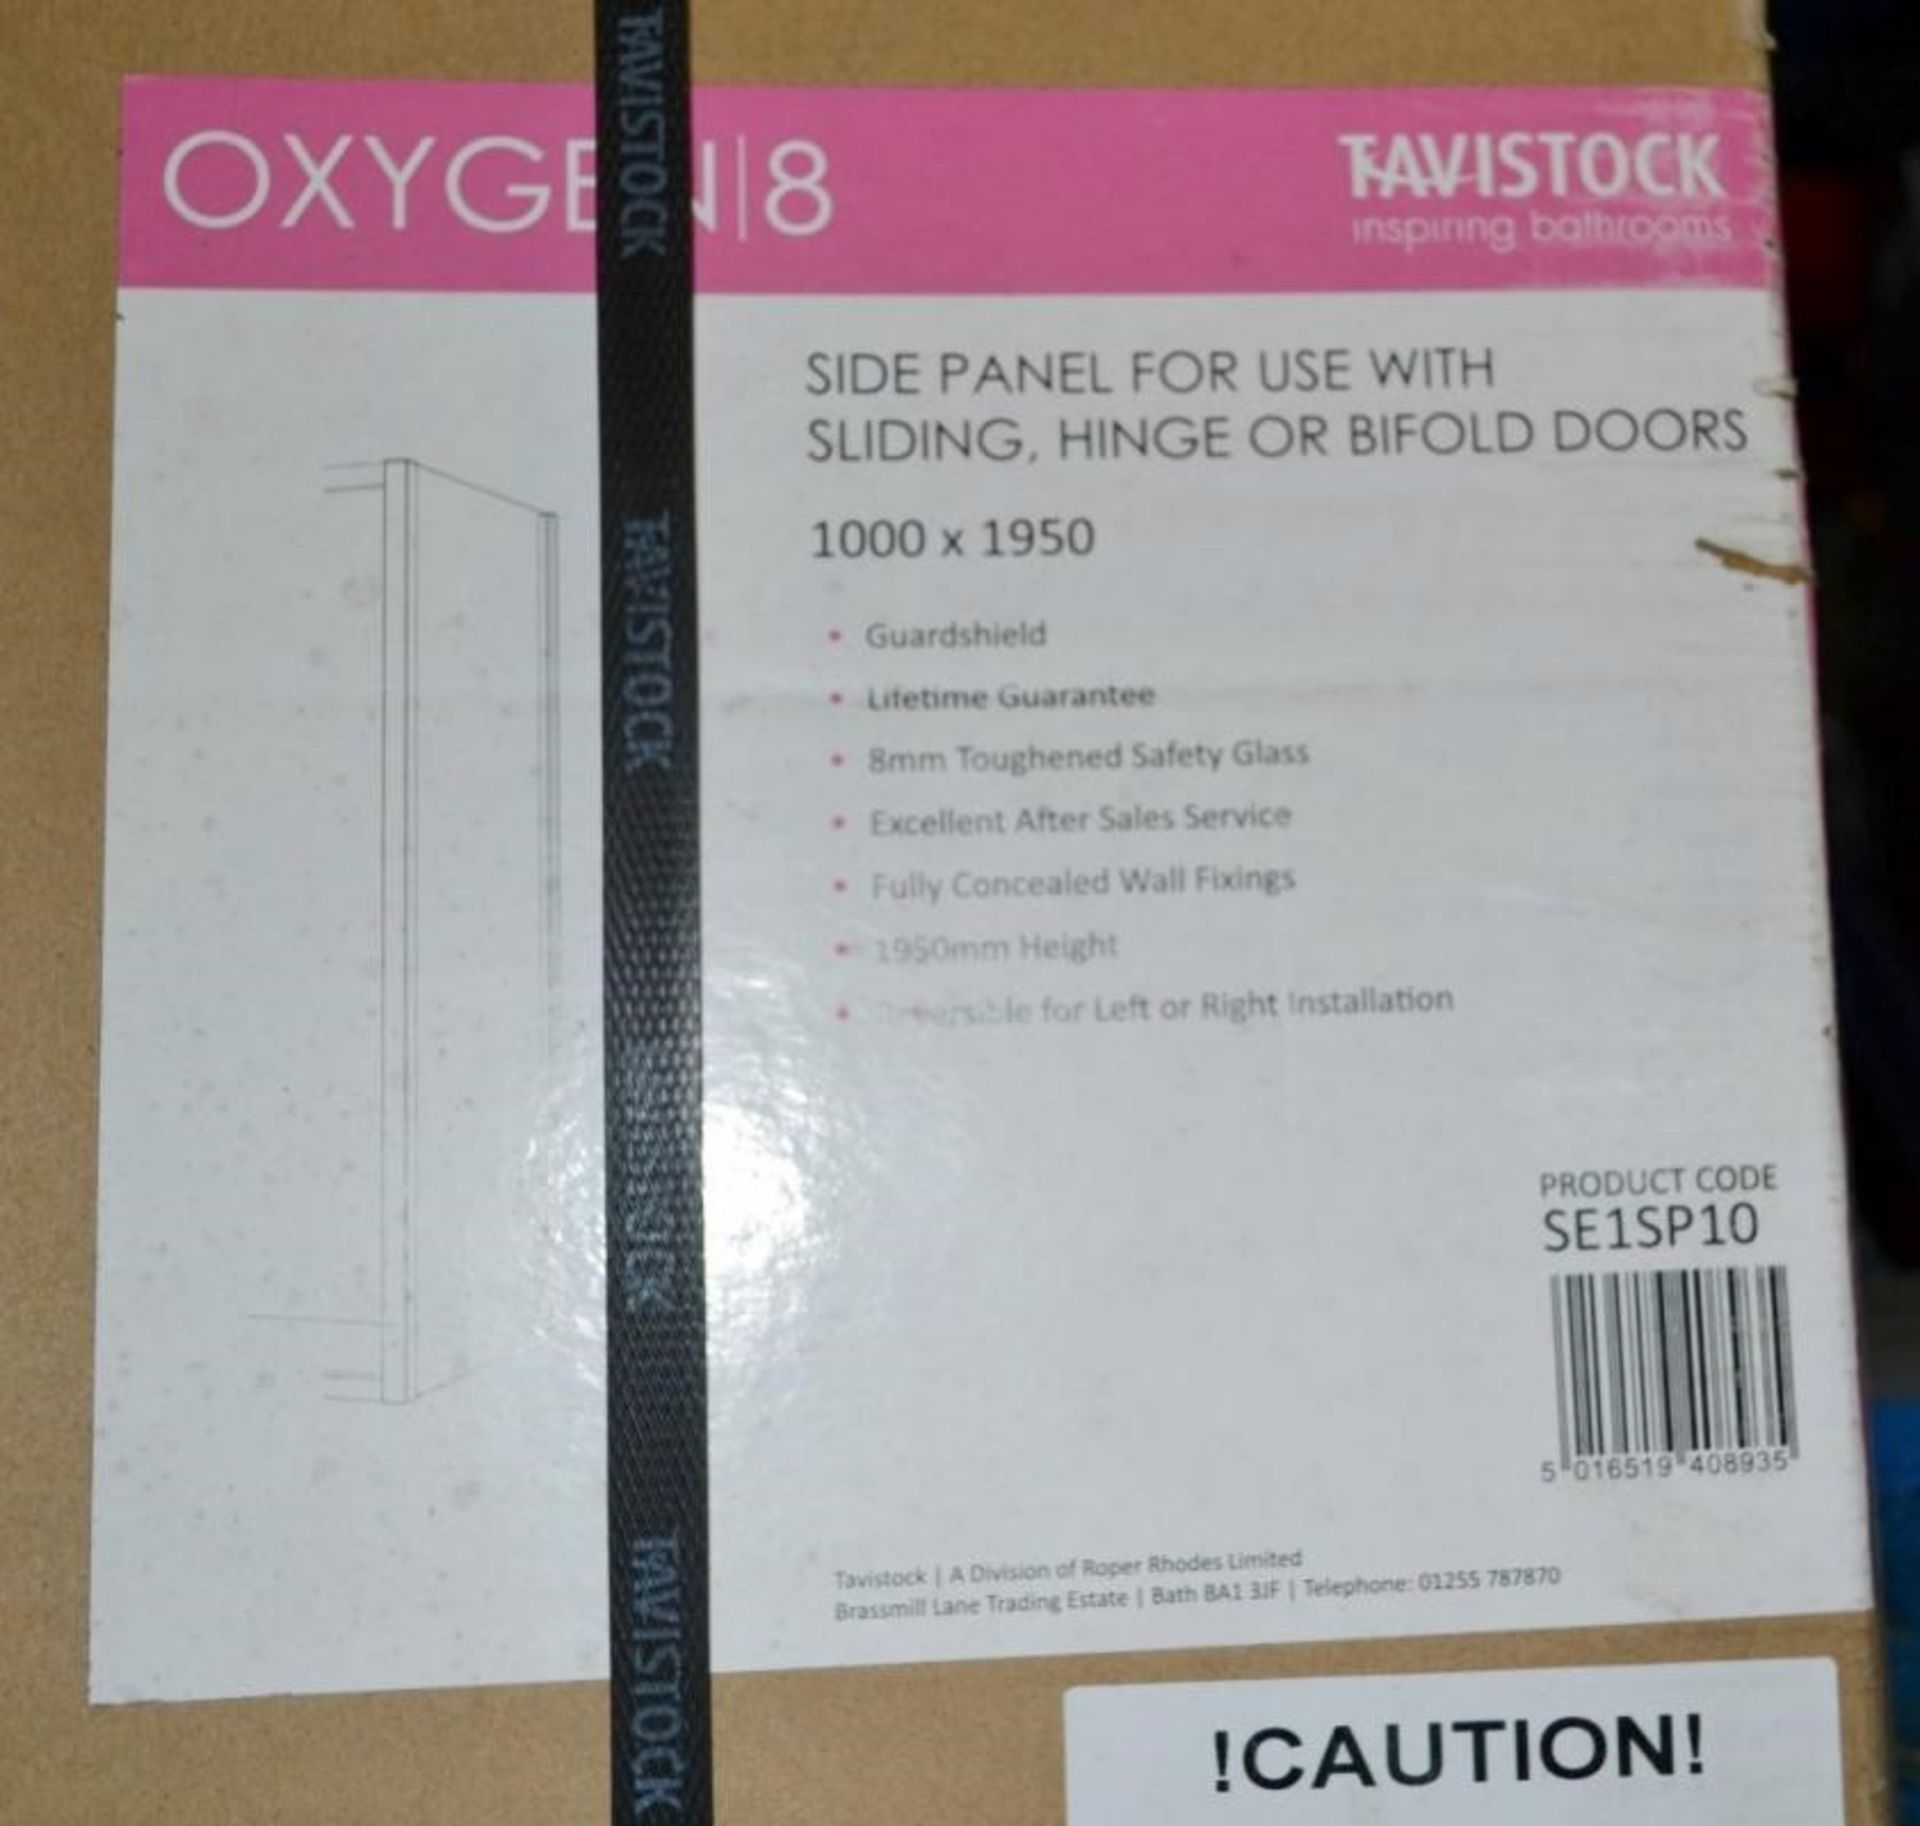 1 x Tavistock Oxygen 8 1000 x 1950cm Side Panel - Code: SE1SP10 - New Boxed Stock - CL022